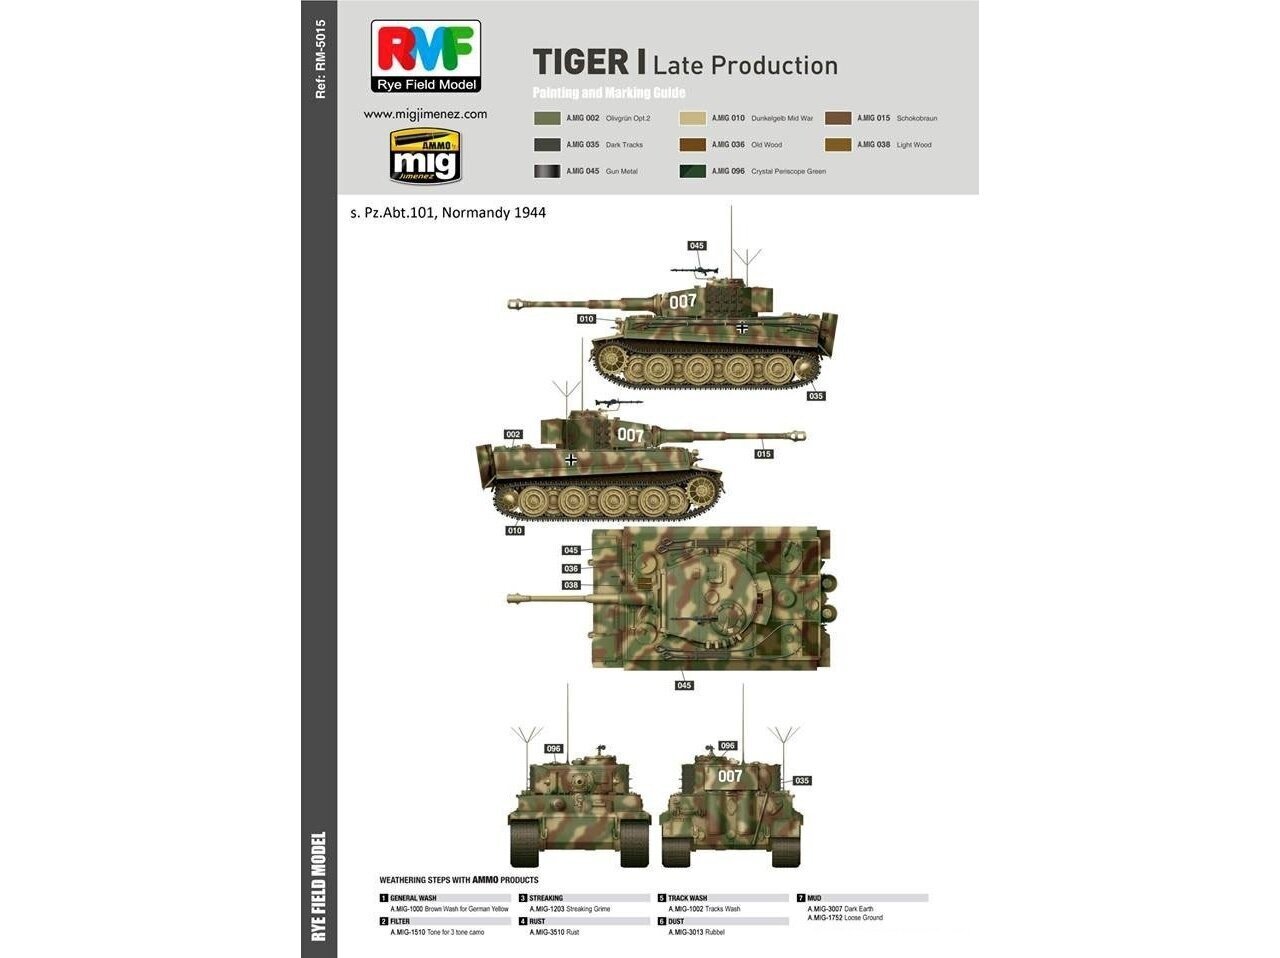 Konstruktorius Rye Field Model - Sd.Kfz. 181 Pz.kpfw.VI Ausf. E Tiger I Late Production, 1/35, RFM-5015, 8 m.+ kaina ir informacija | Konstruktoriai ir kaladėlės | pigu.lt